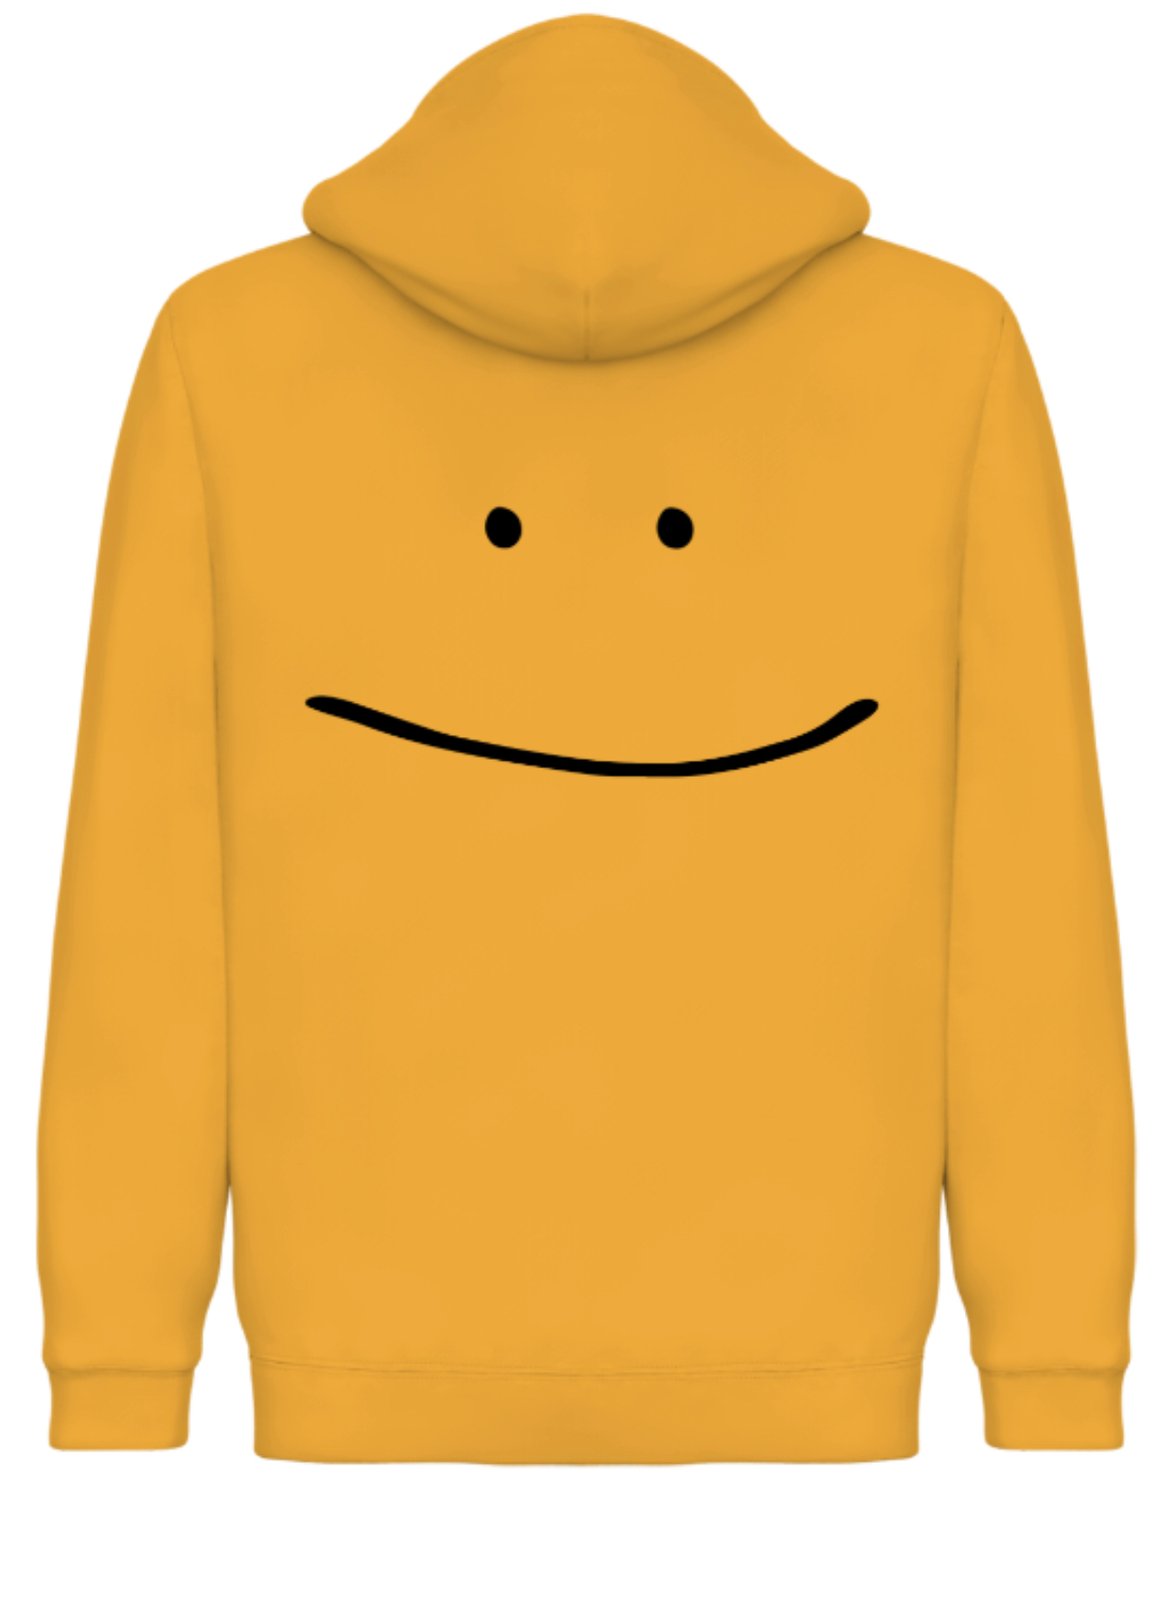 hoodie smiley face